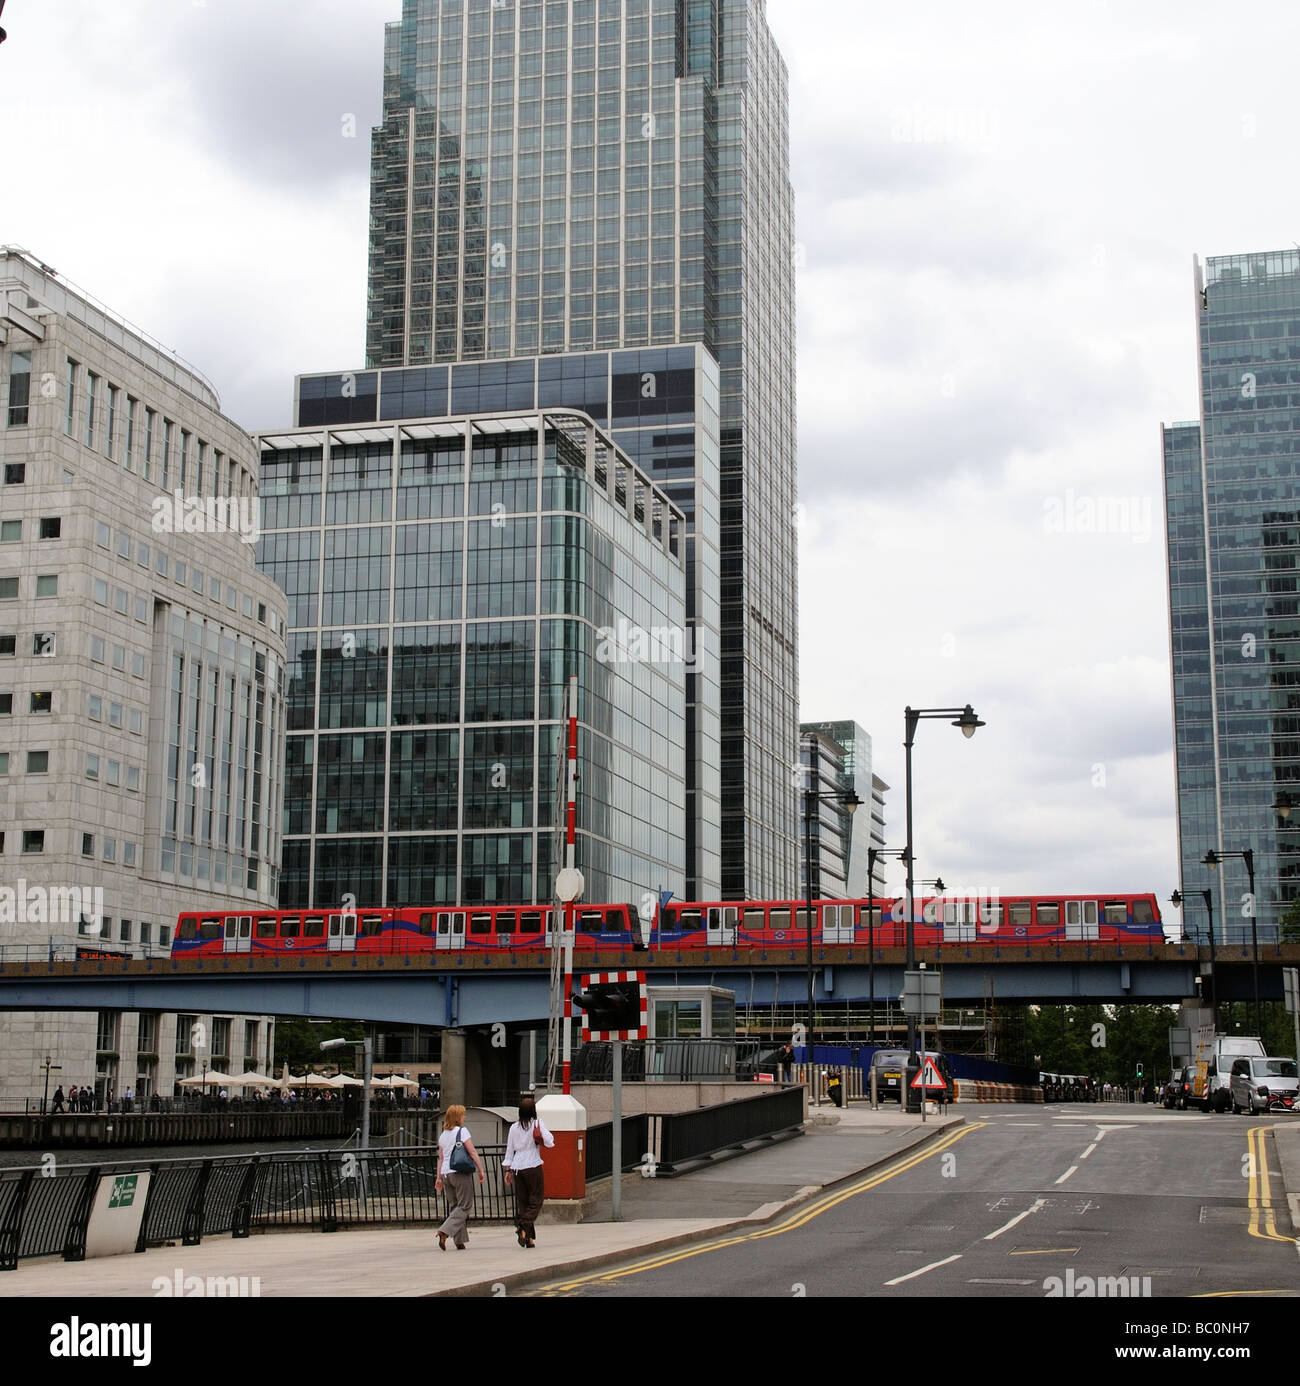 Canary Wharf London UK buildings and a DLR Docklands Light Railway train Stock Photo